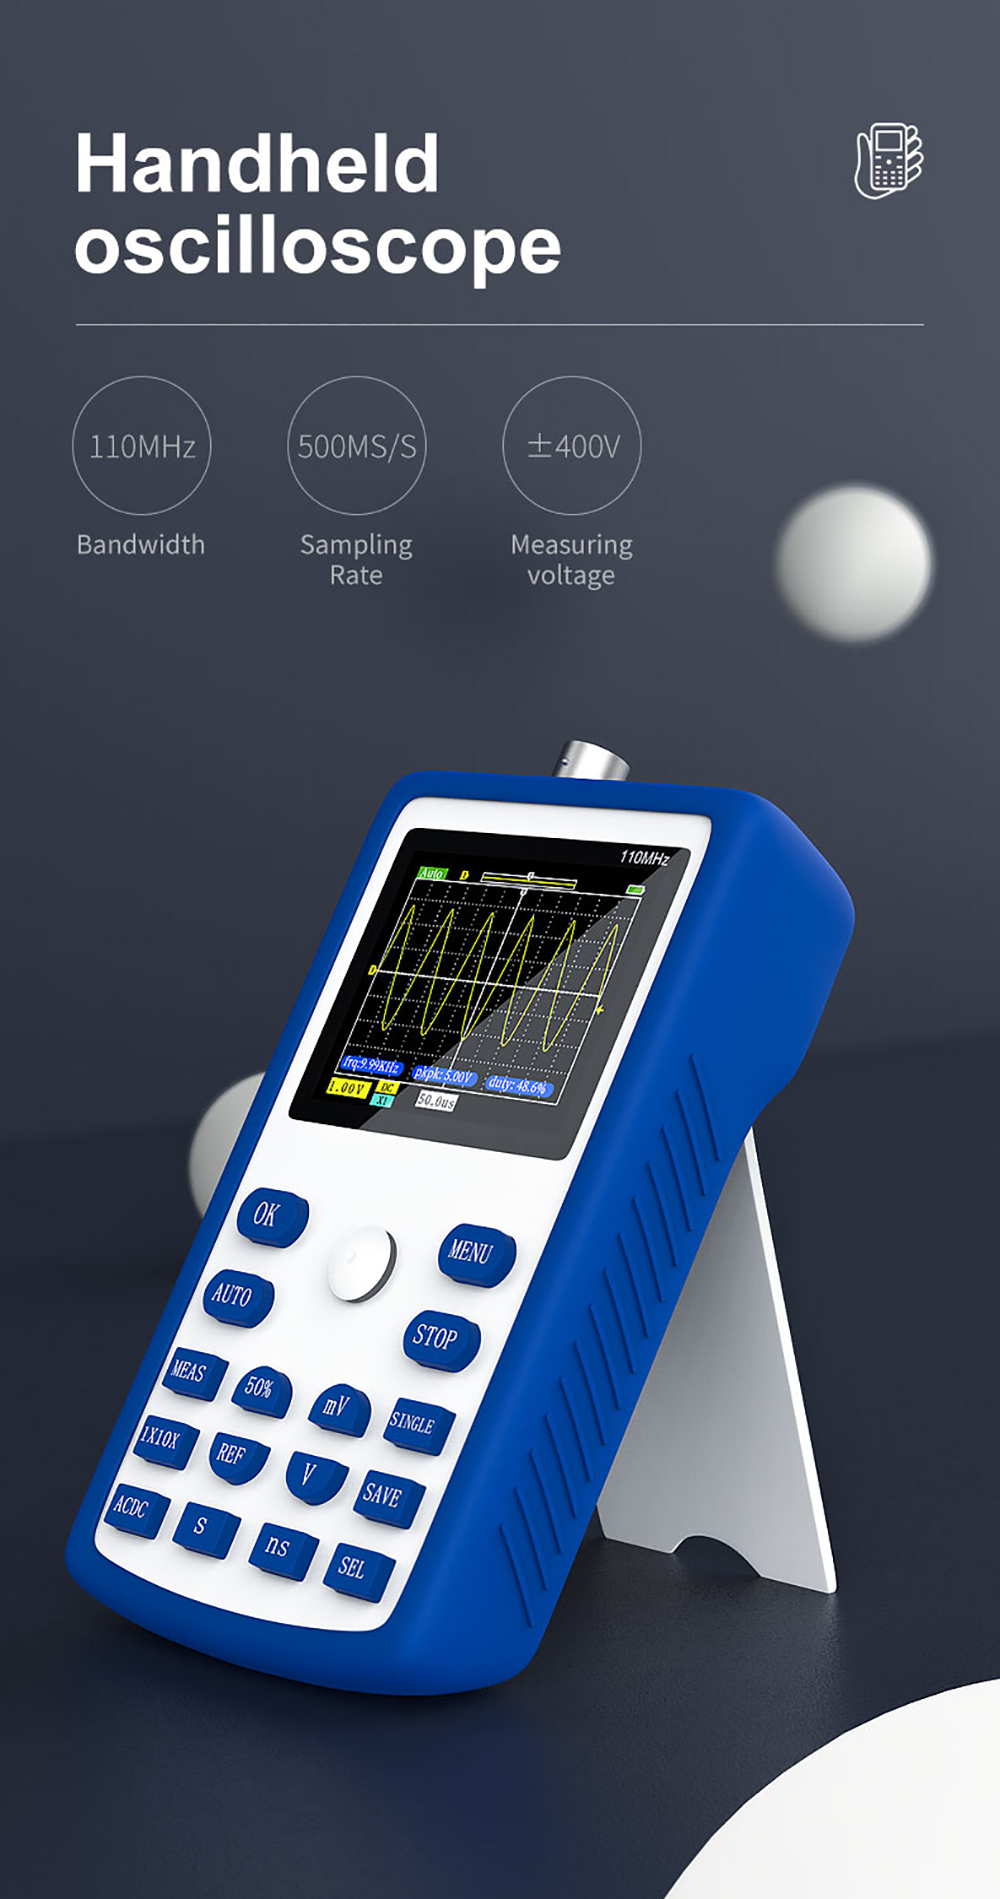 FNIRSI-1C15-Professional-Digital-Oscilloscope-500MSs-Sampling-Rate-110MHz-Analog-Bandwidth-Support-W-1757564-4